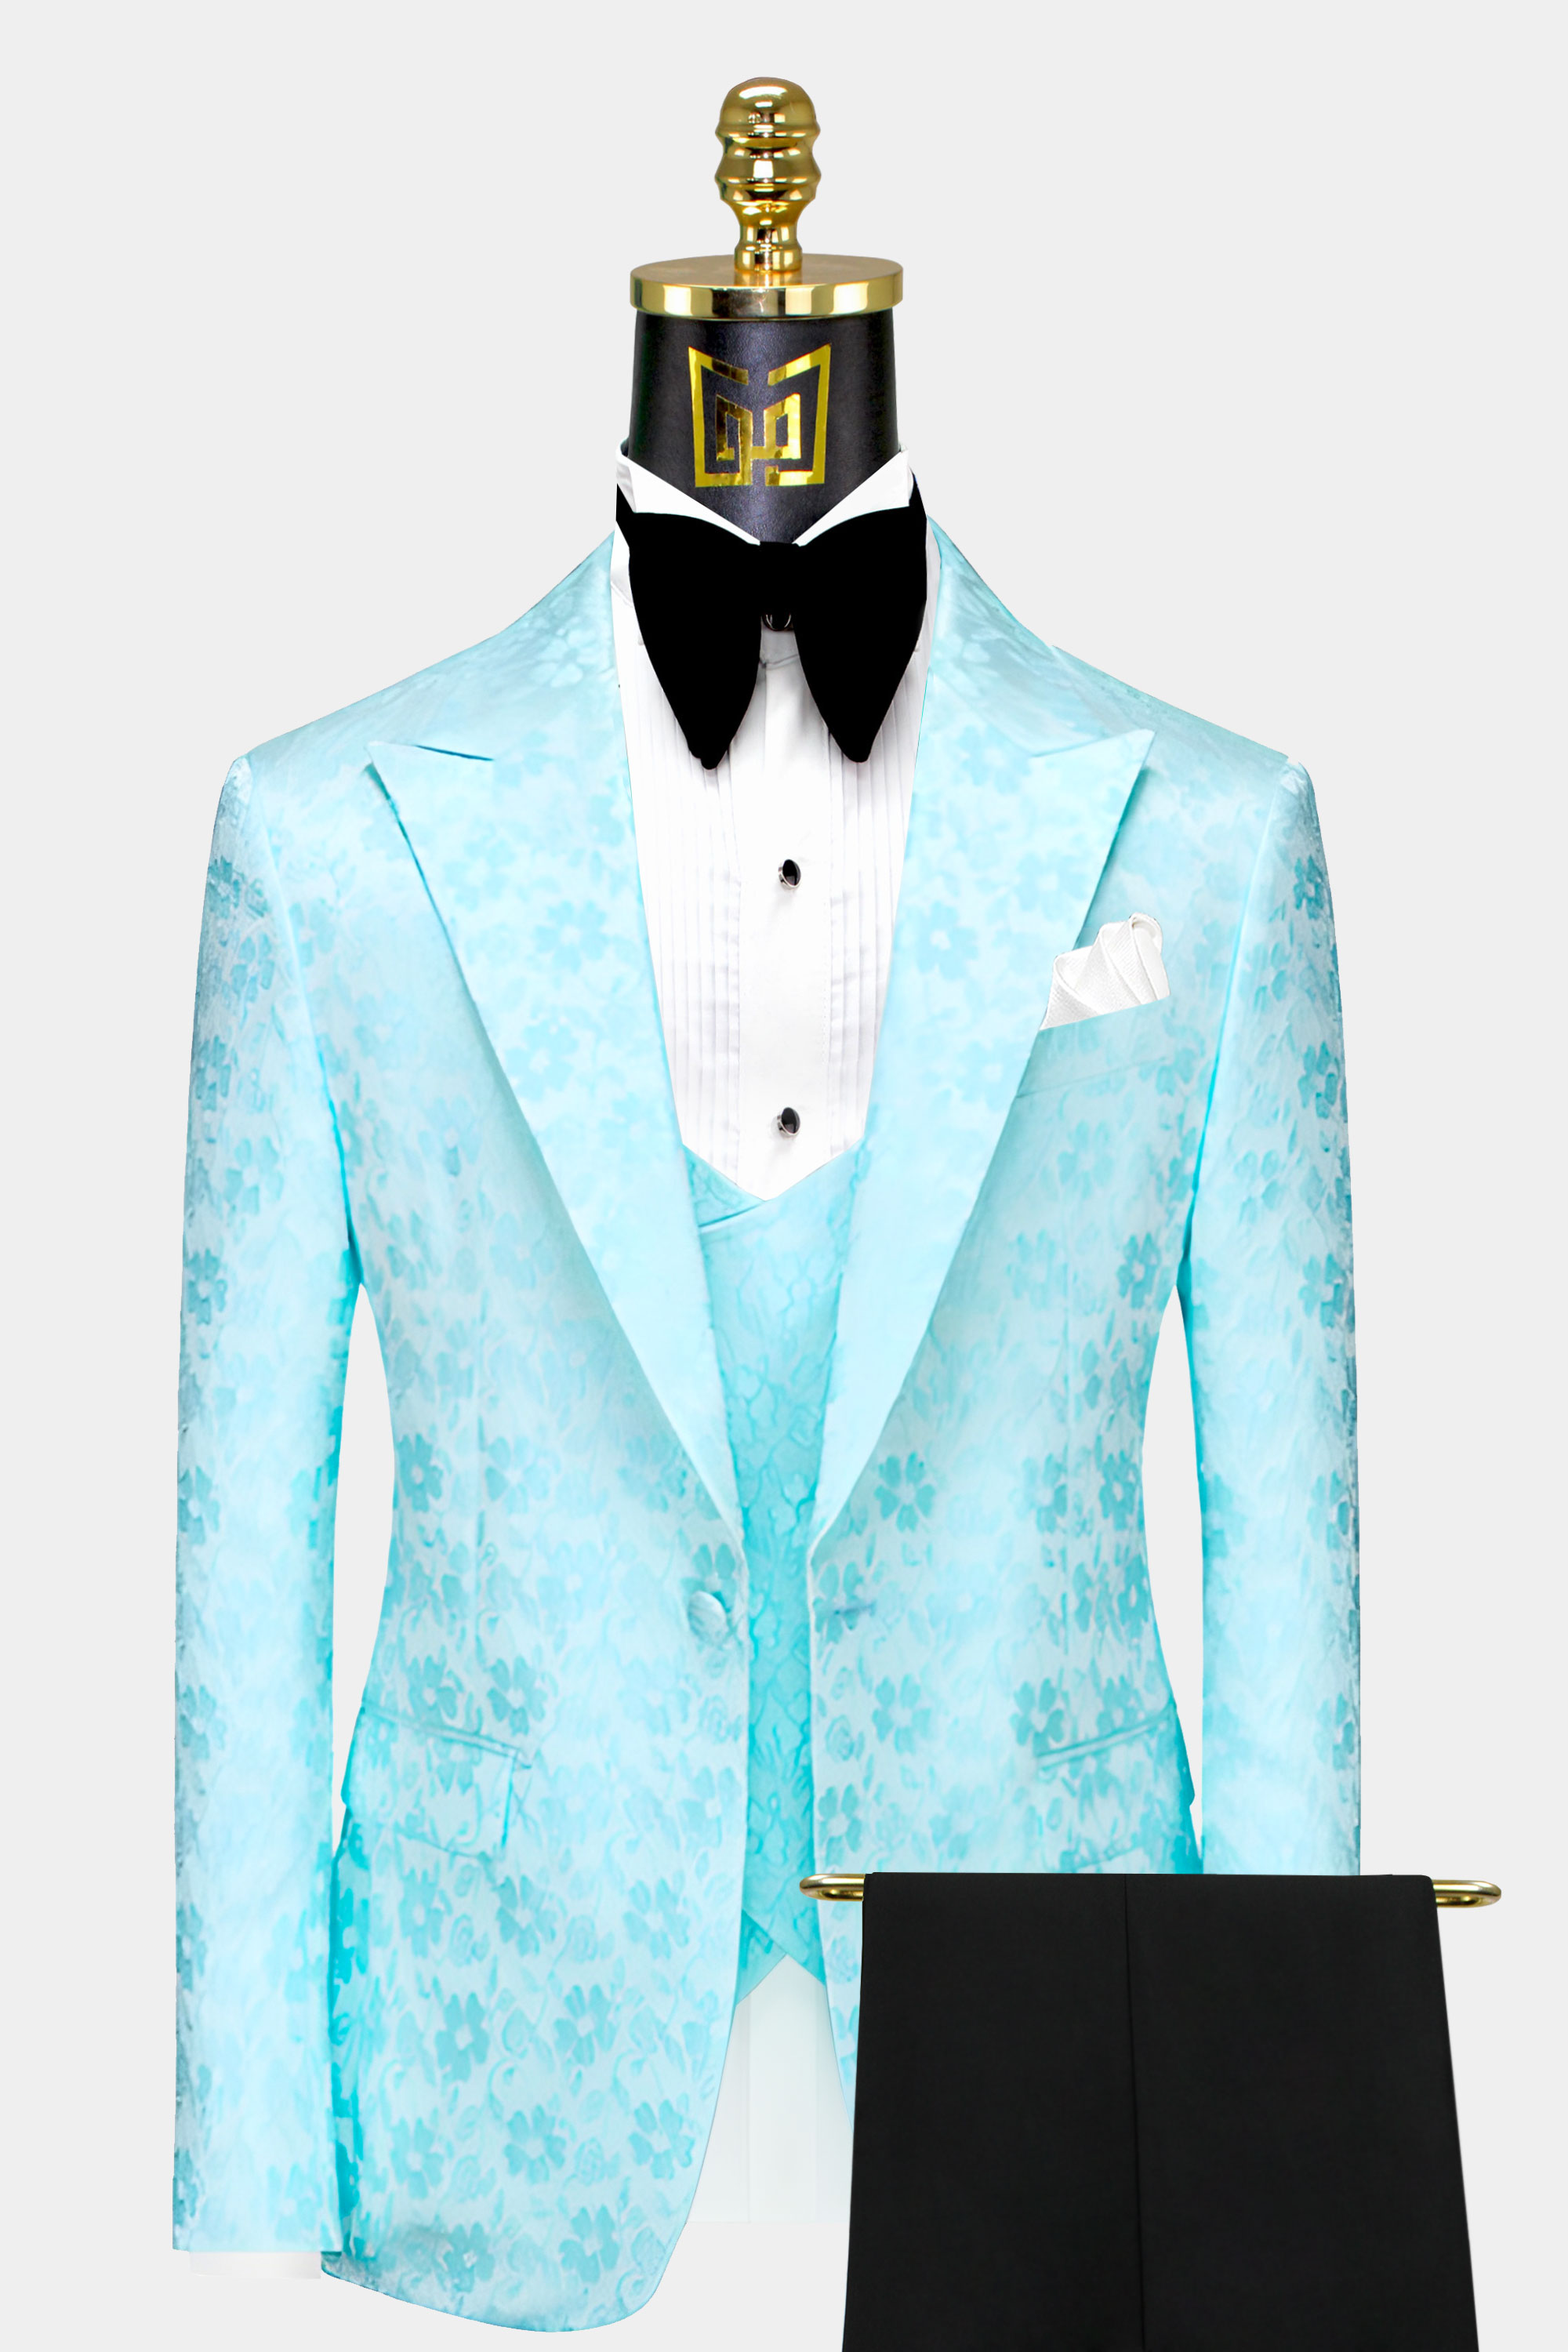 Black-and-Turquoise-Tuxedo-Prom-Tuxedo-from-Gentlemansguru.com